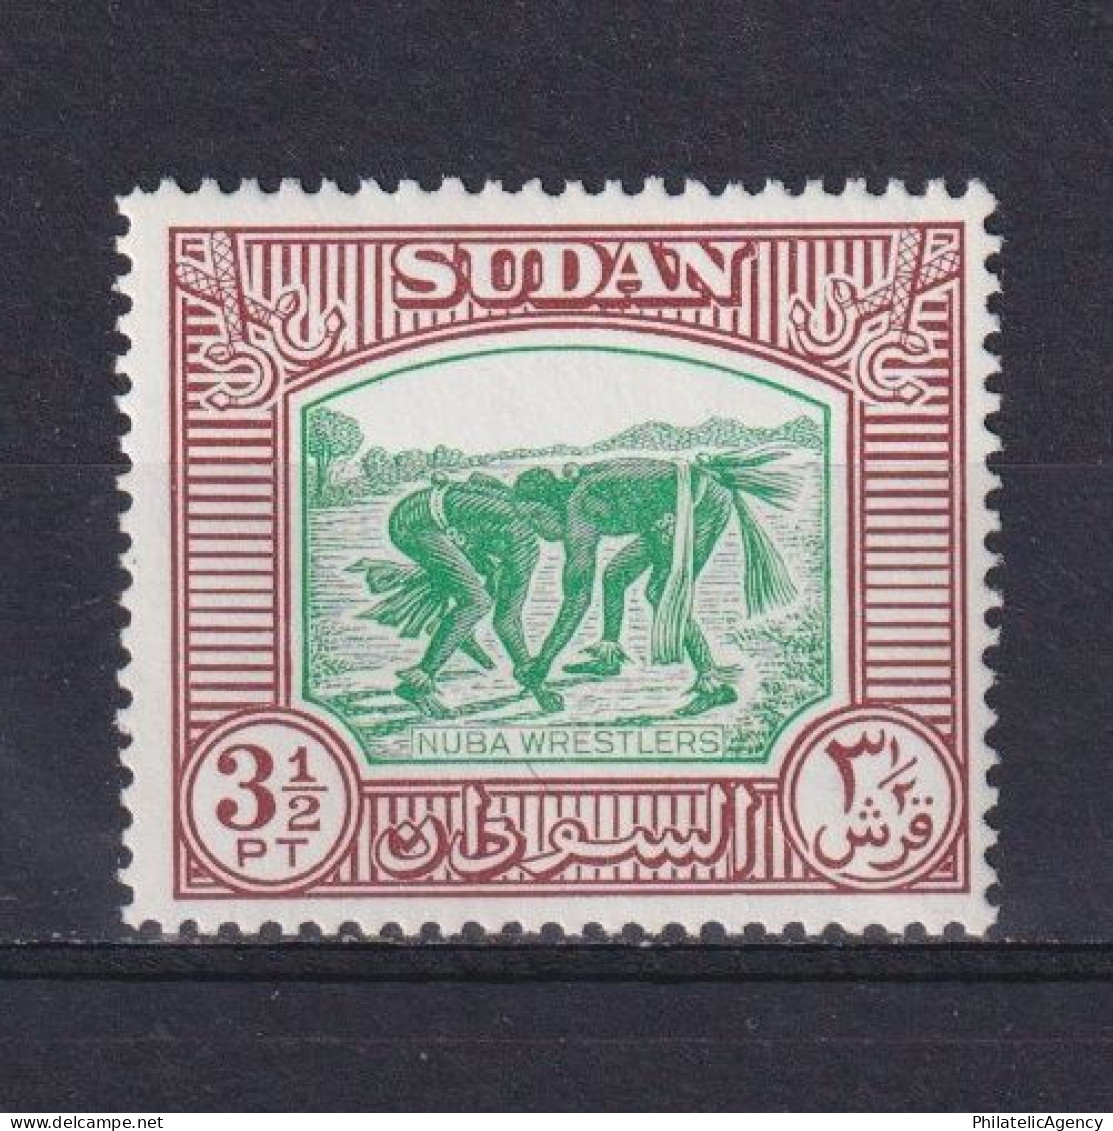 SWDAN 1951, Sc# 107,  Nuba Wrestlers, MH - Sudan (...-1951)